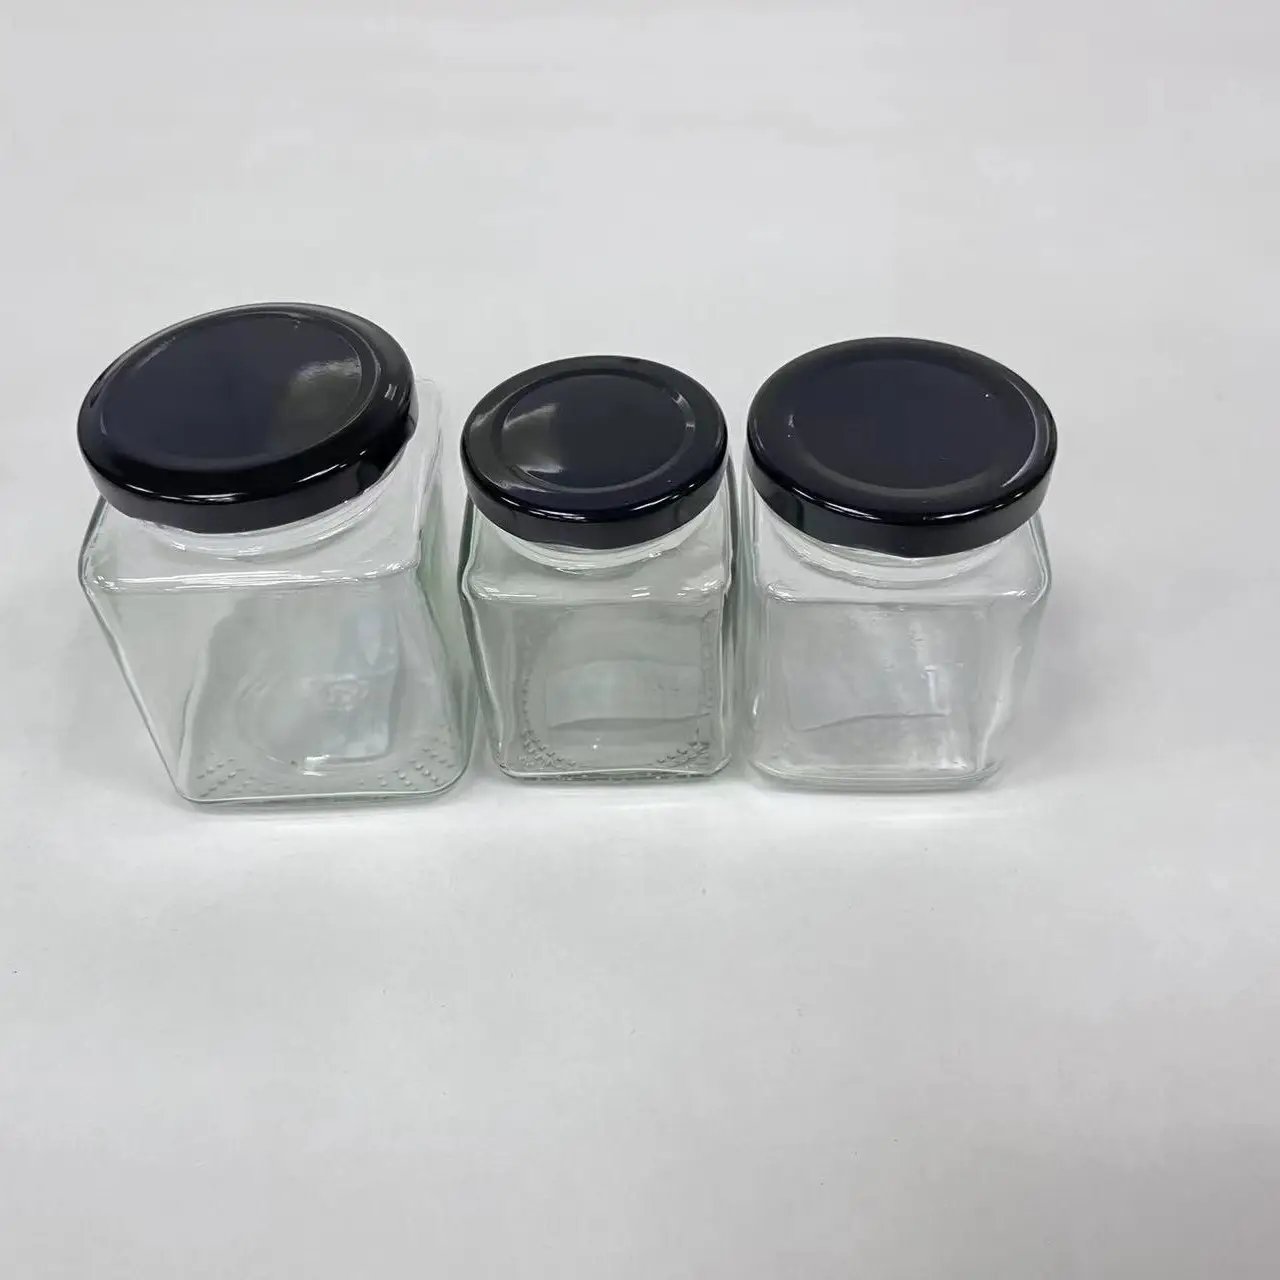 packaging glass jar 5cm d x 6cm h round glass jar black matte